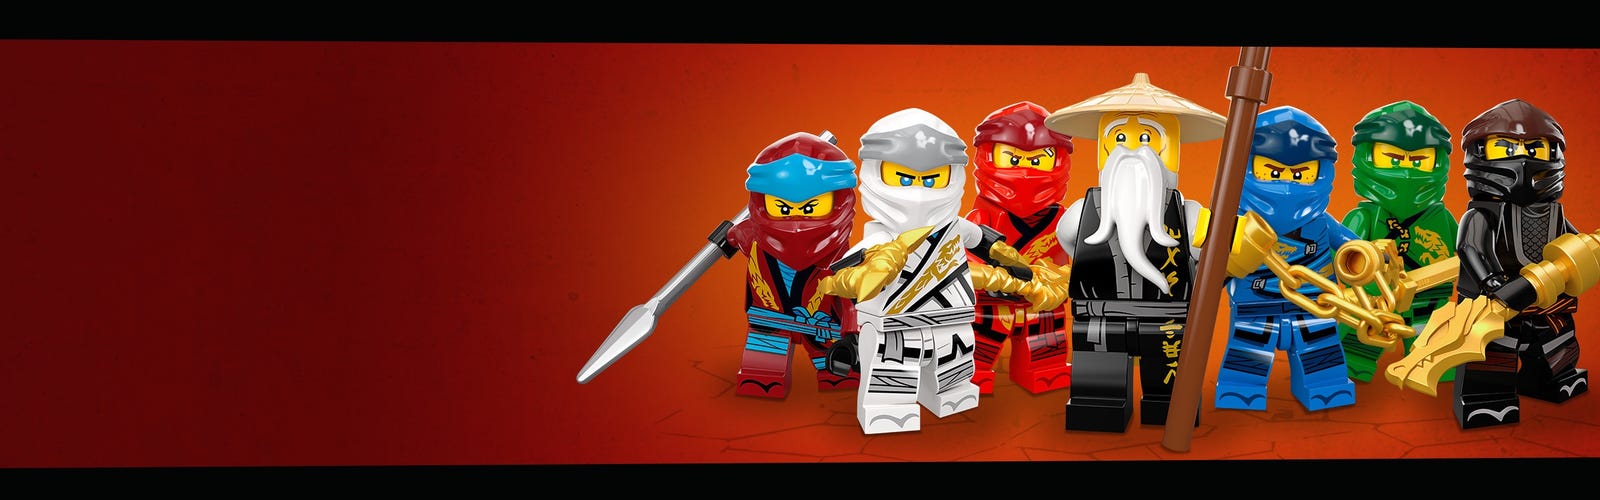 Gambar Lego Ninja Go - KibrisPDR